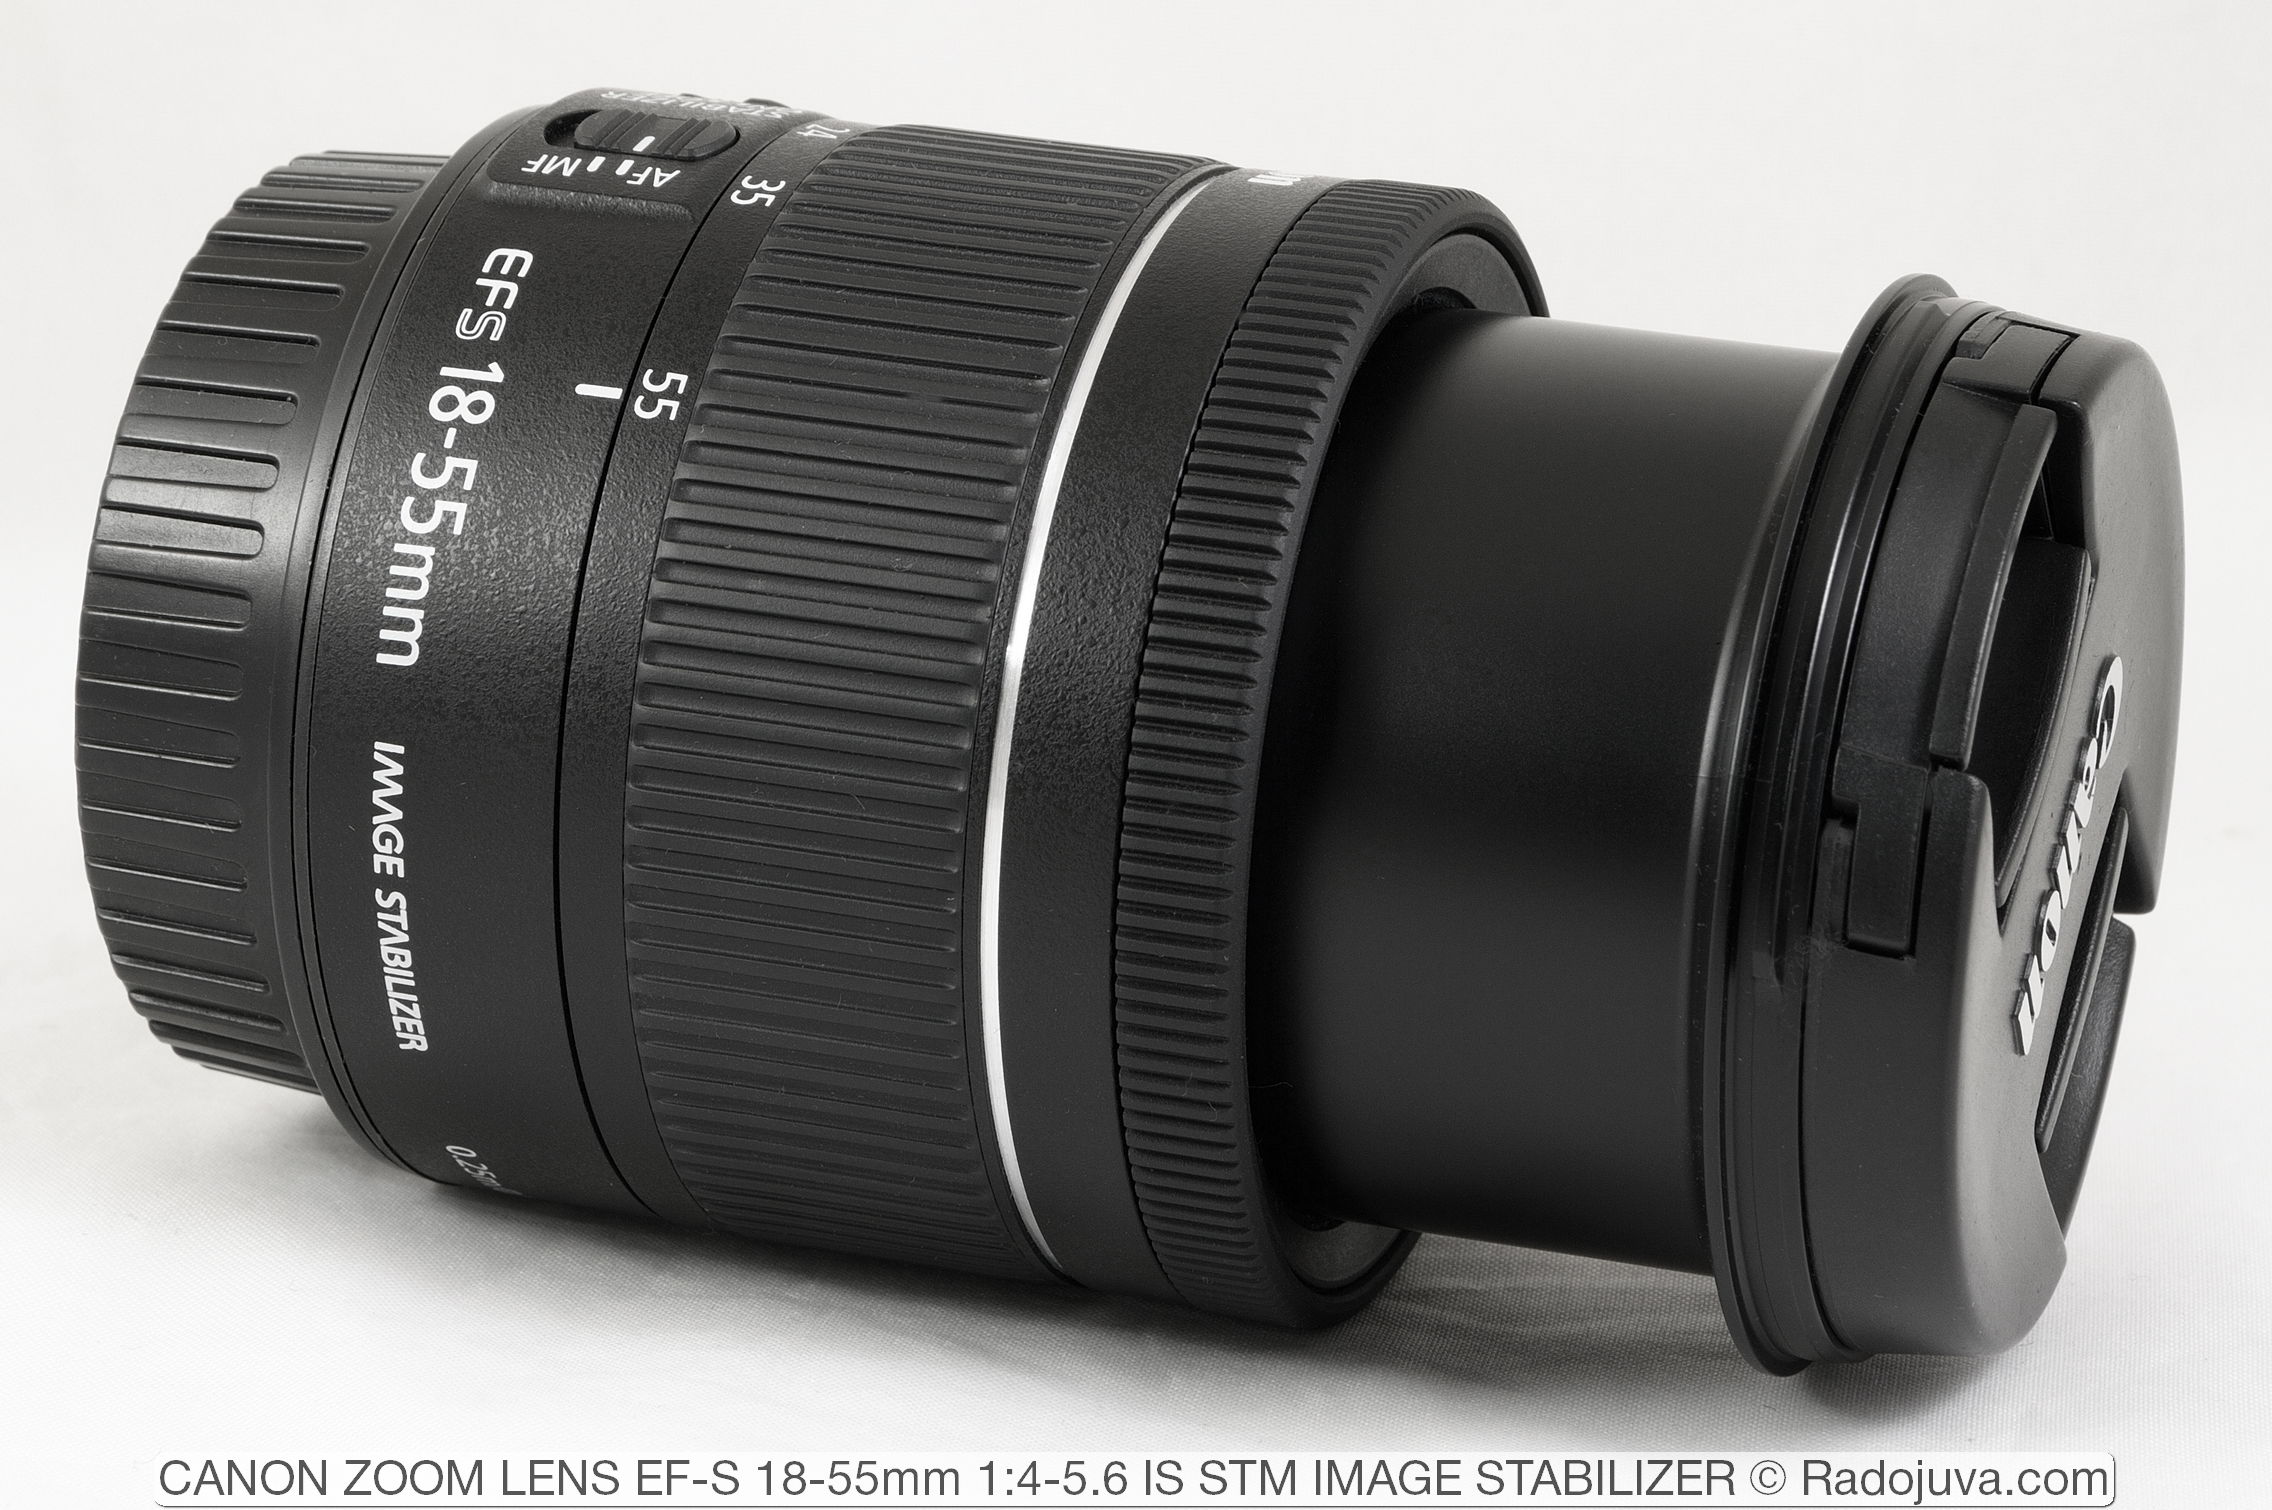 Canon Zoom Lens EF-S 18-55mm 1:4-5.6 IS STM Image Stabilizer